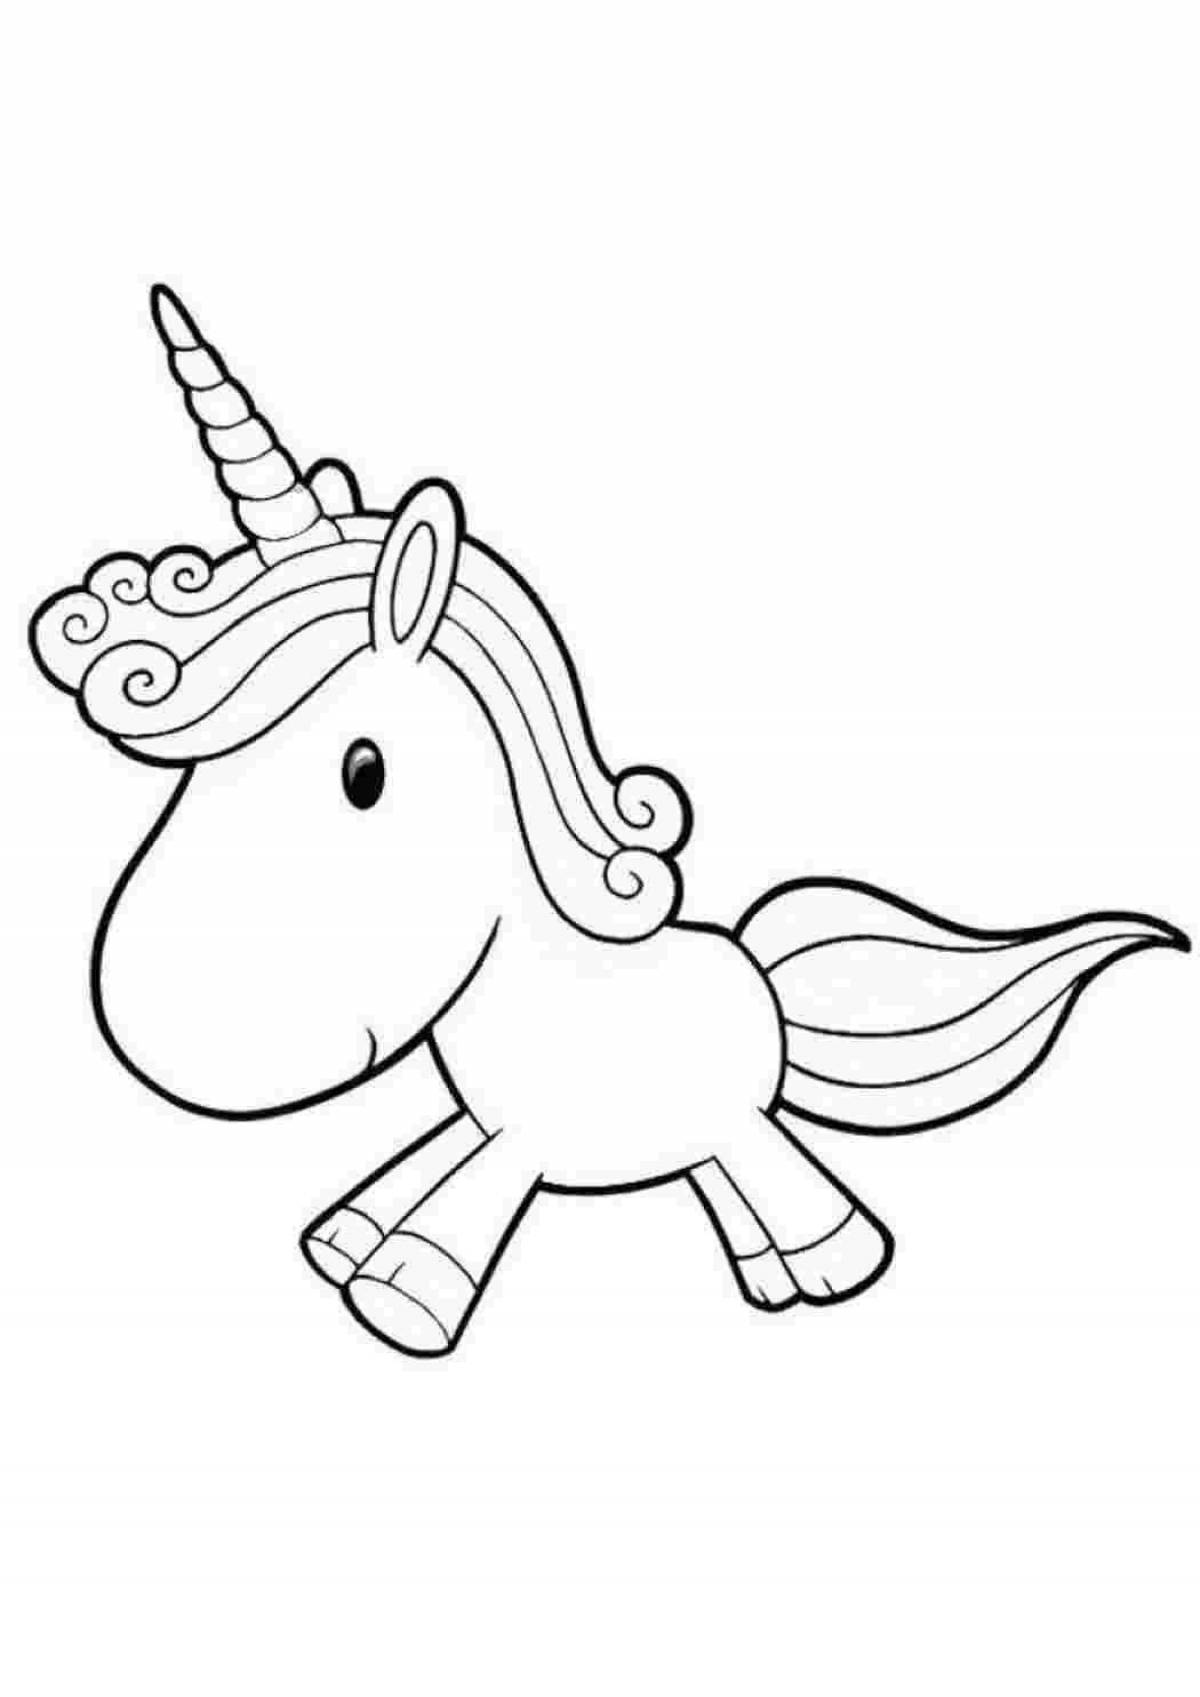 Playtime coloring page unicorn cartoon